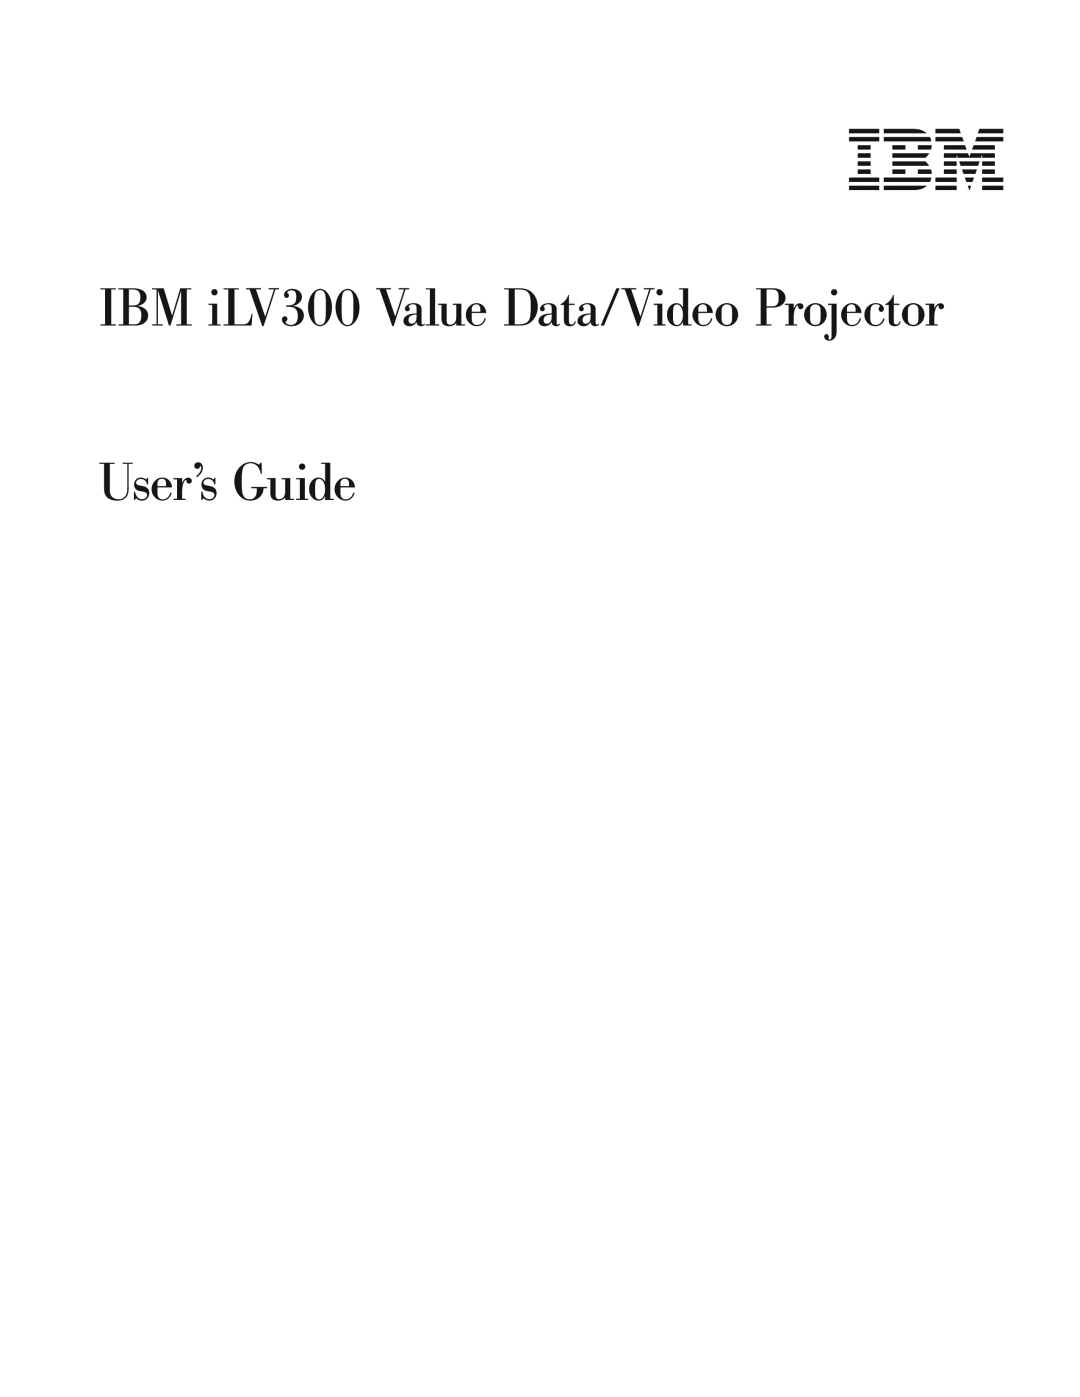 IBM Partner Pavilion manual IBM iLV300 Value Data/Video Projector User’s Guide 